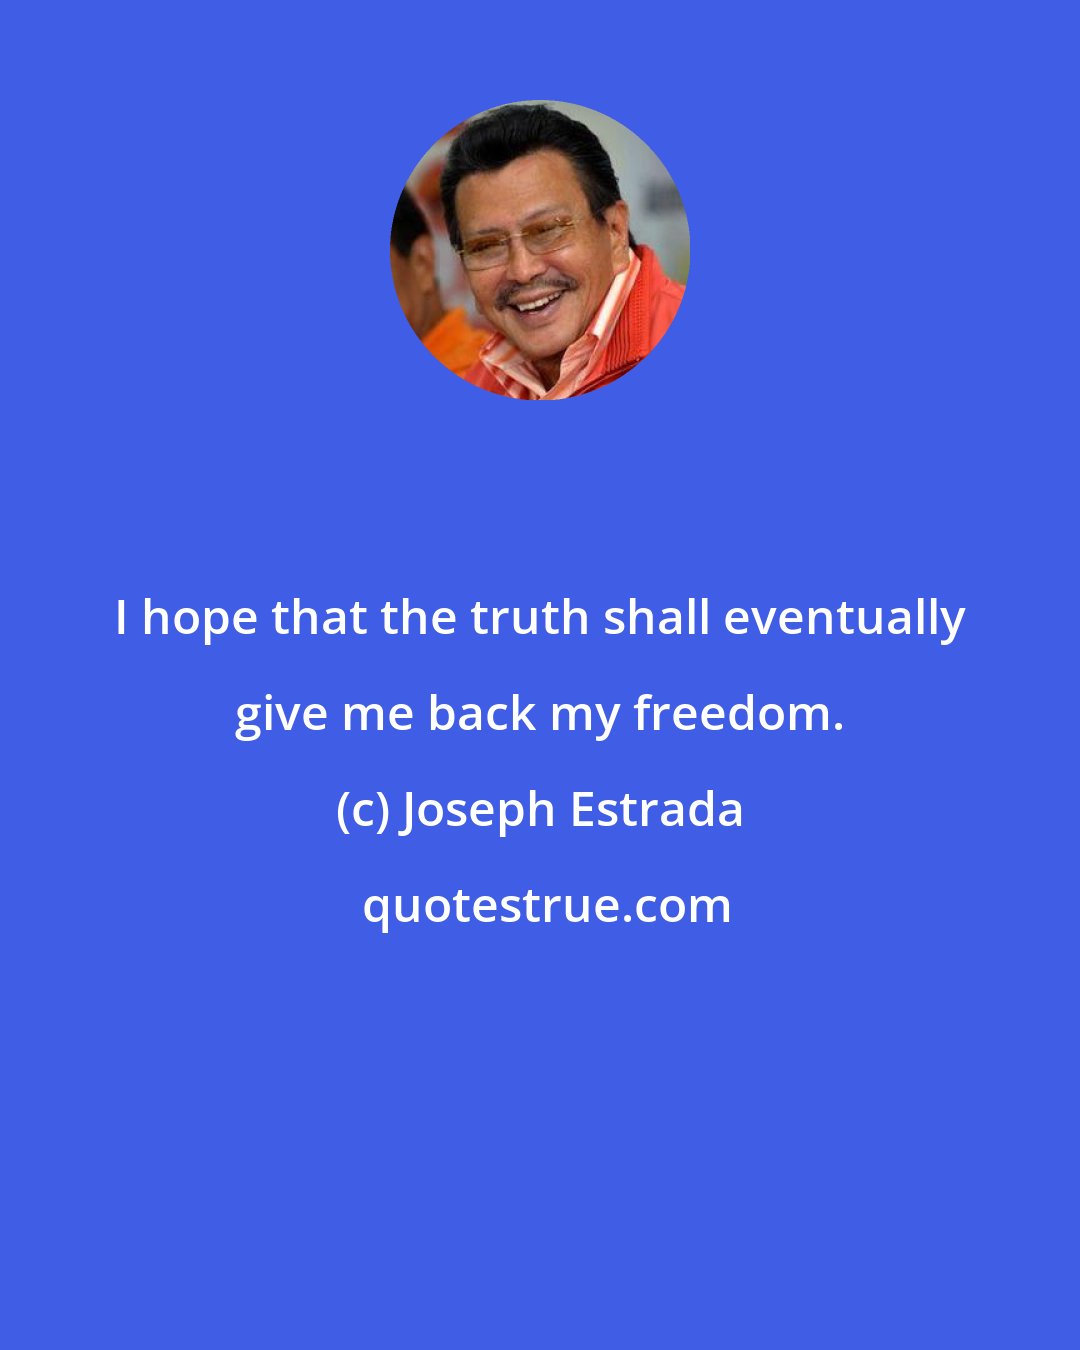 Joseph Estrada: I hope that the truth shall eventually give me back my freedom.